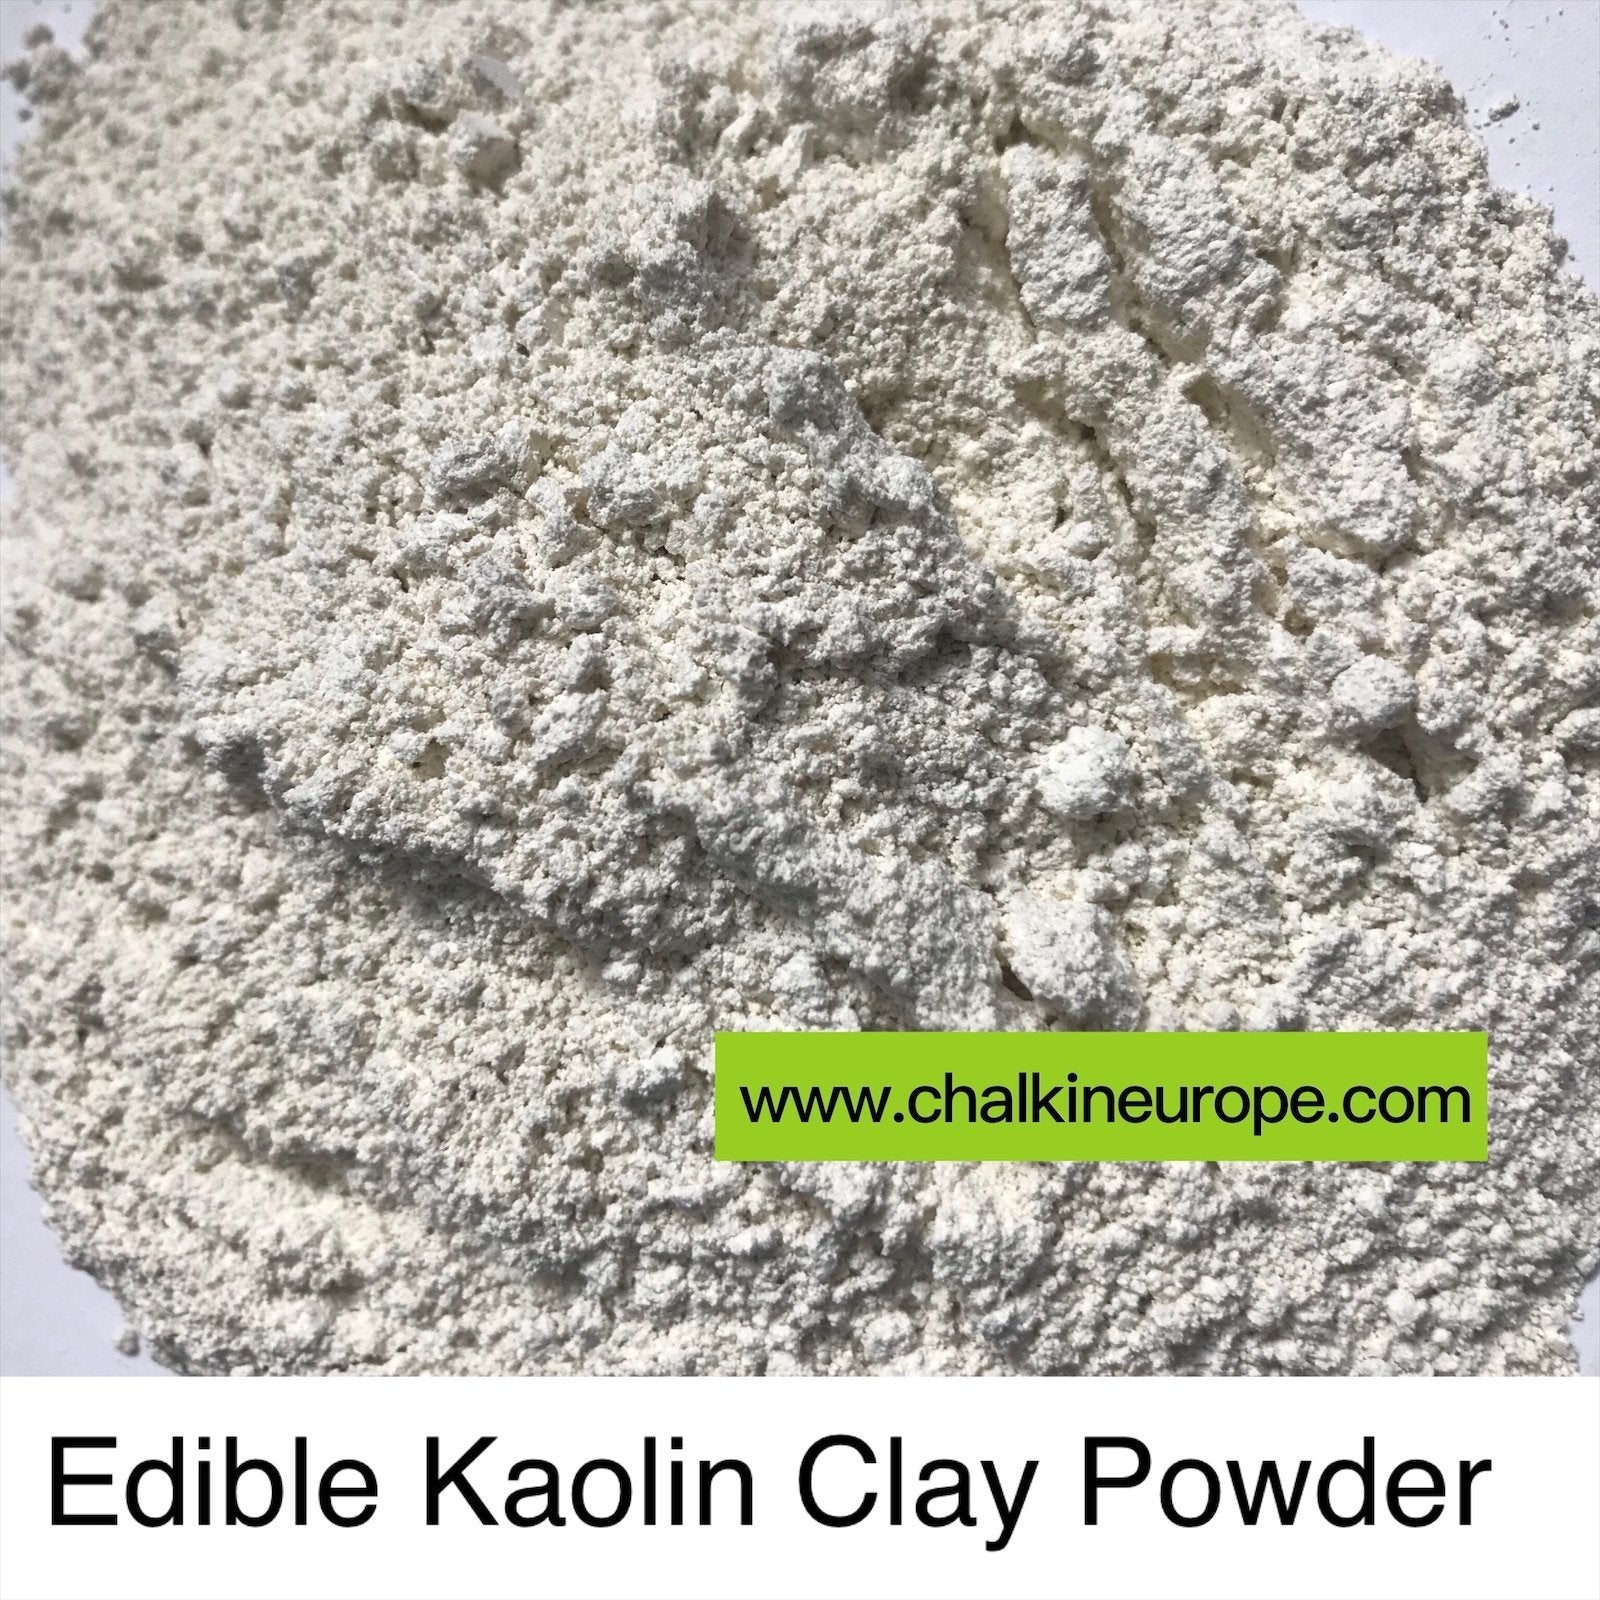 Edible kaolin clay - Chalkineurope